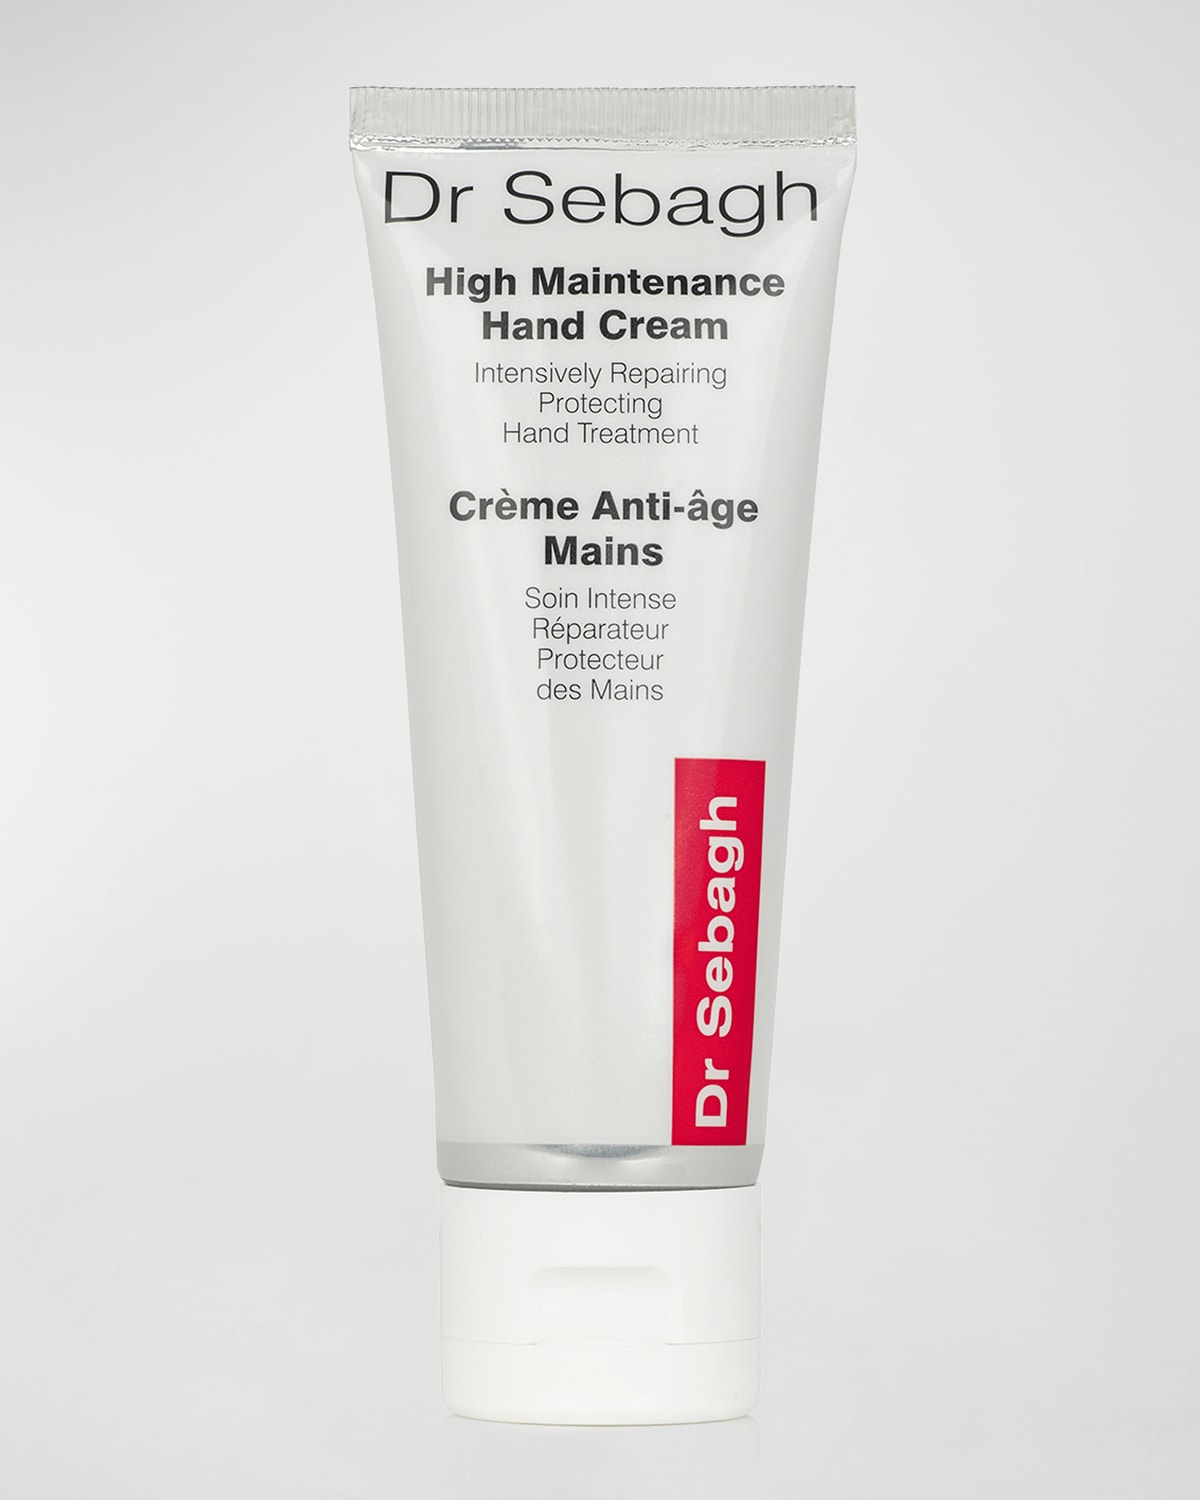 Dr Sebagh 2.5 oz. High Maintenance Hand Cream